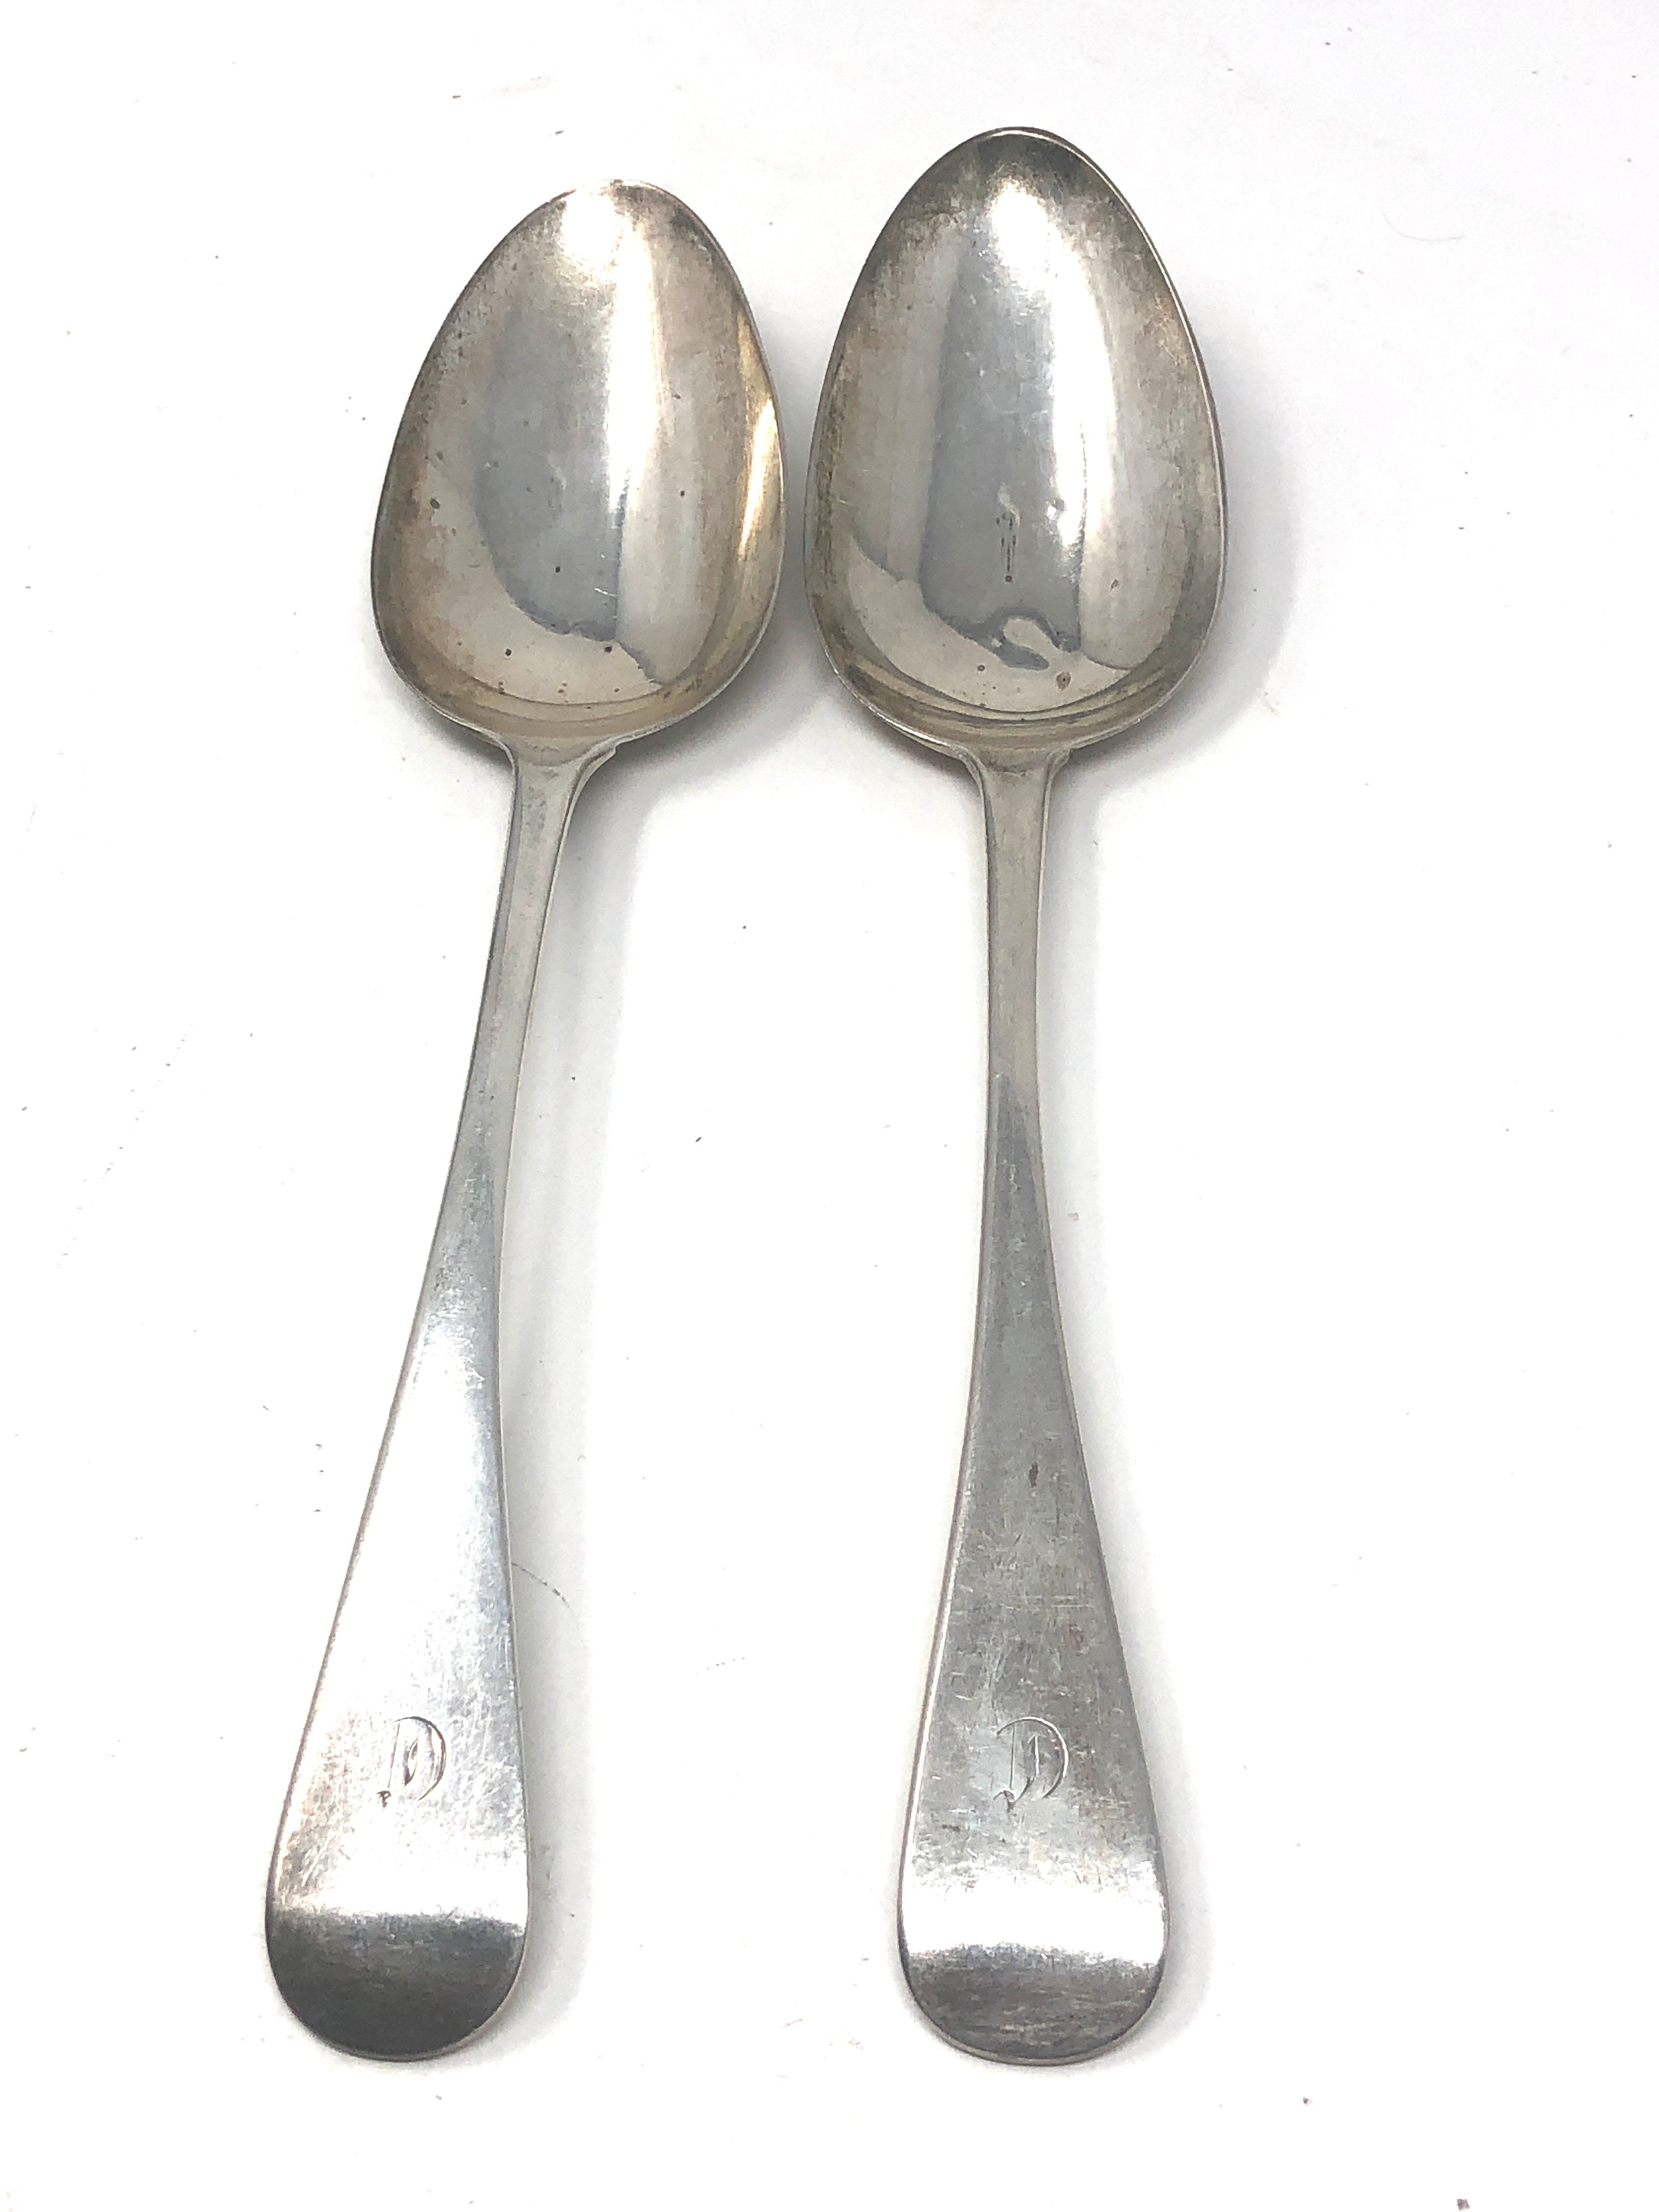 2 georgian silver table spoons London silver hallmarks